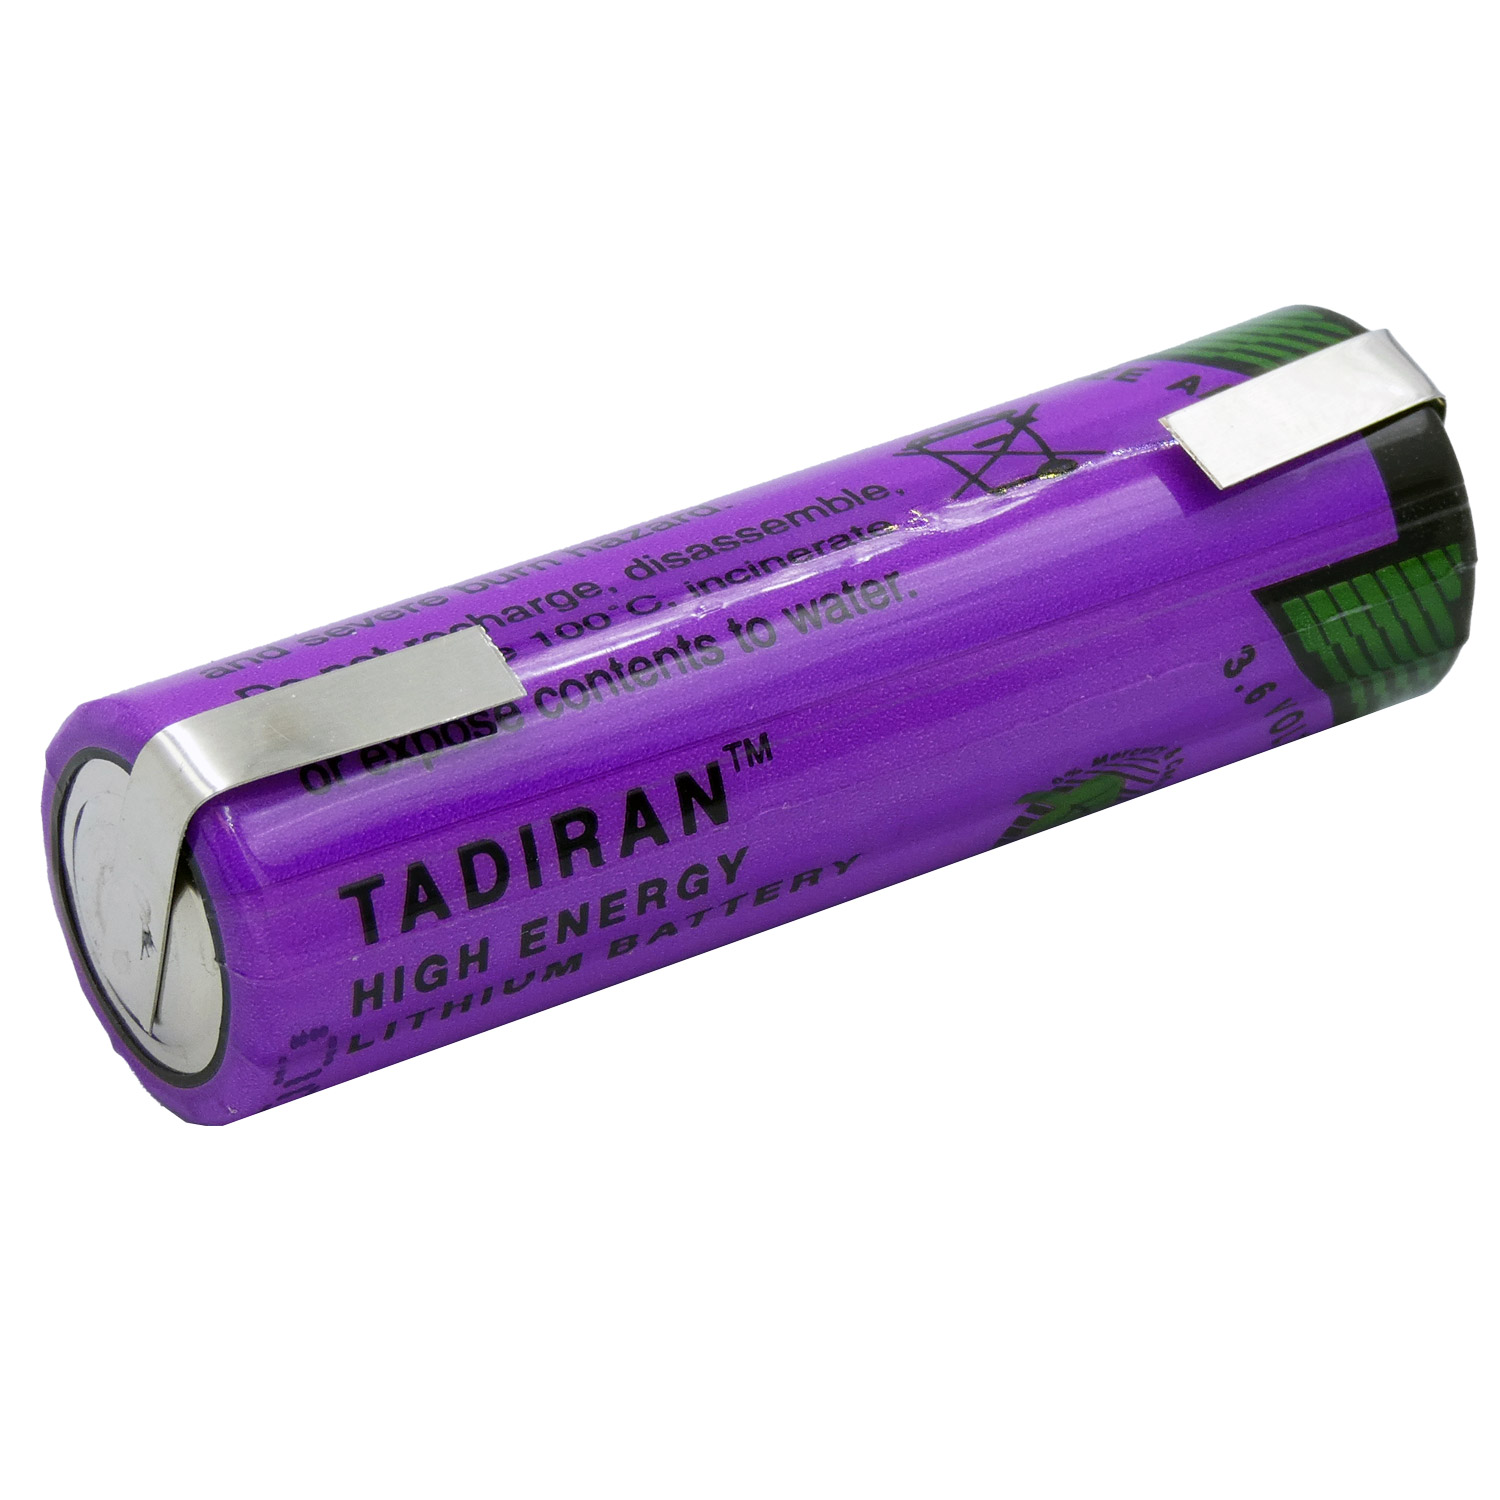 Tadiran SL360/T 3,6V Lithium Batterie AA Mignon mit Lötfahne in U-Form